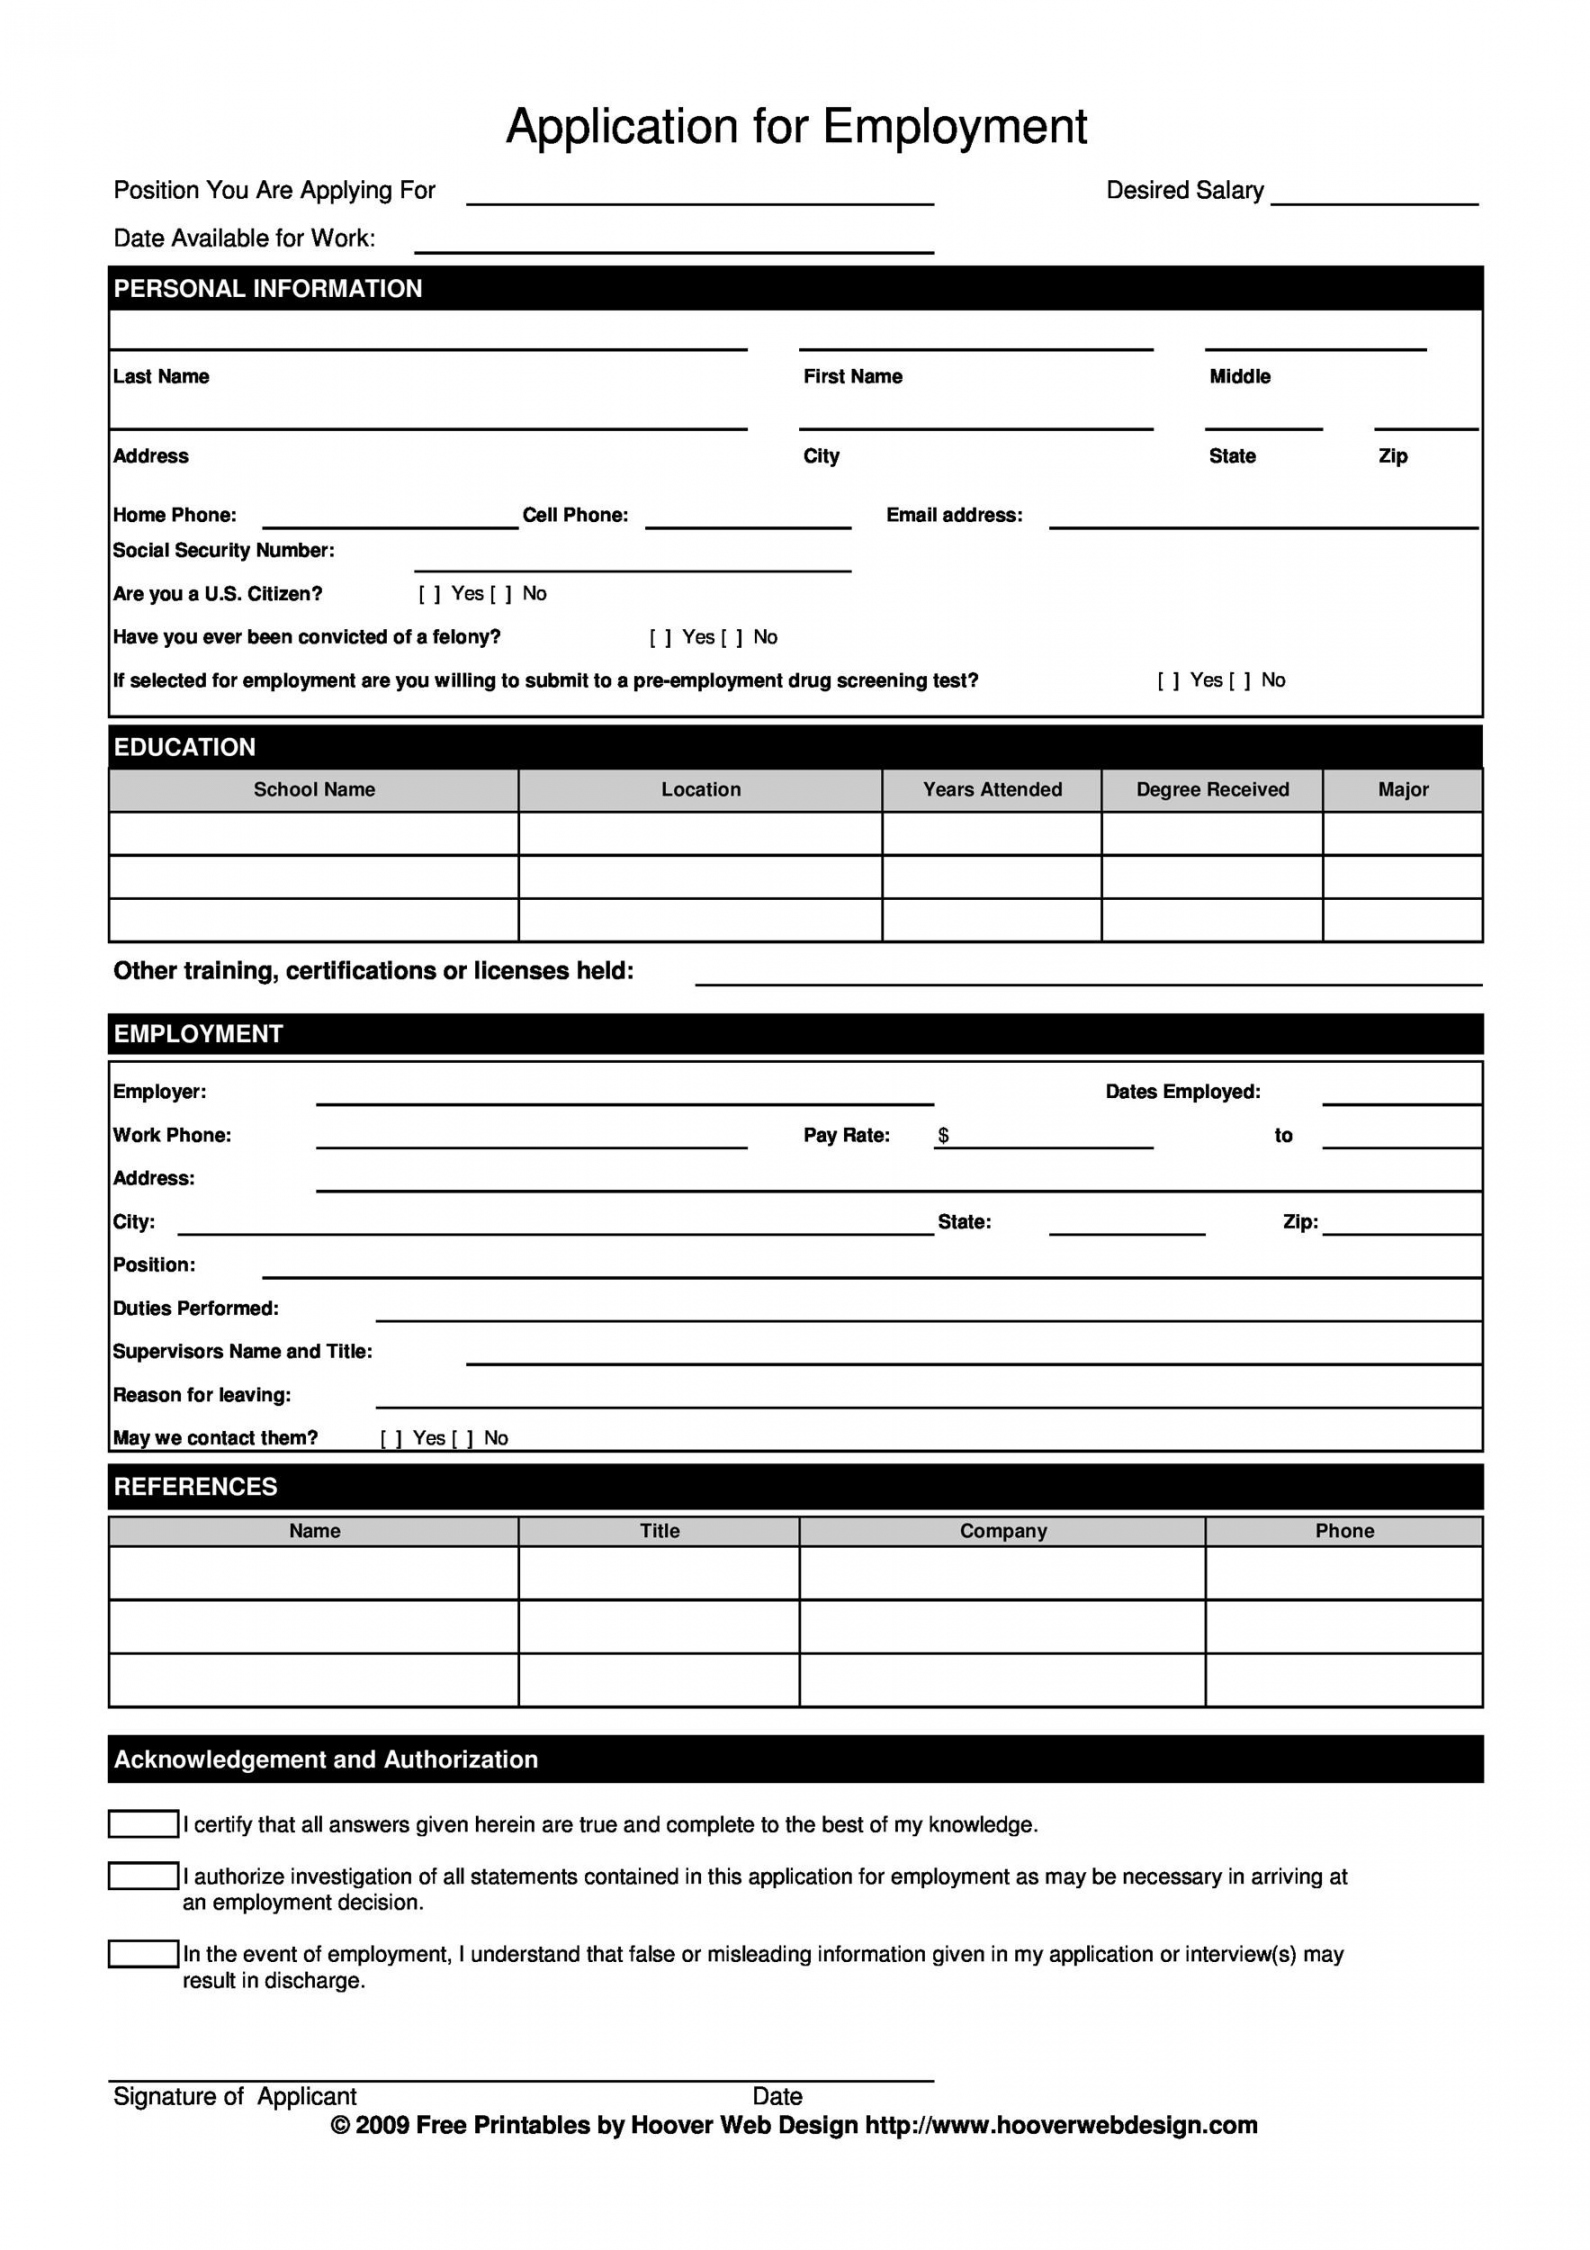 Application For Employment Form Free Printable - Printable -  Free Employment / Job Application Form Templates [Printable] ᐅ